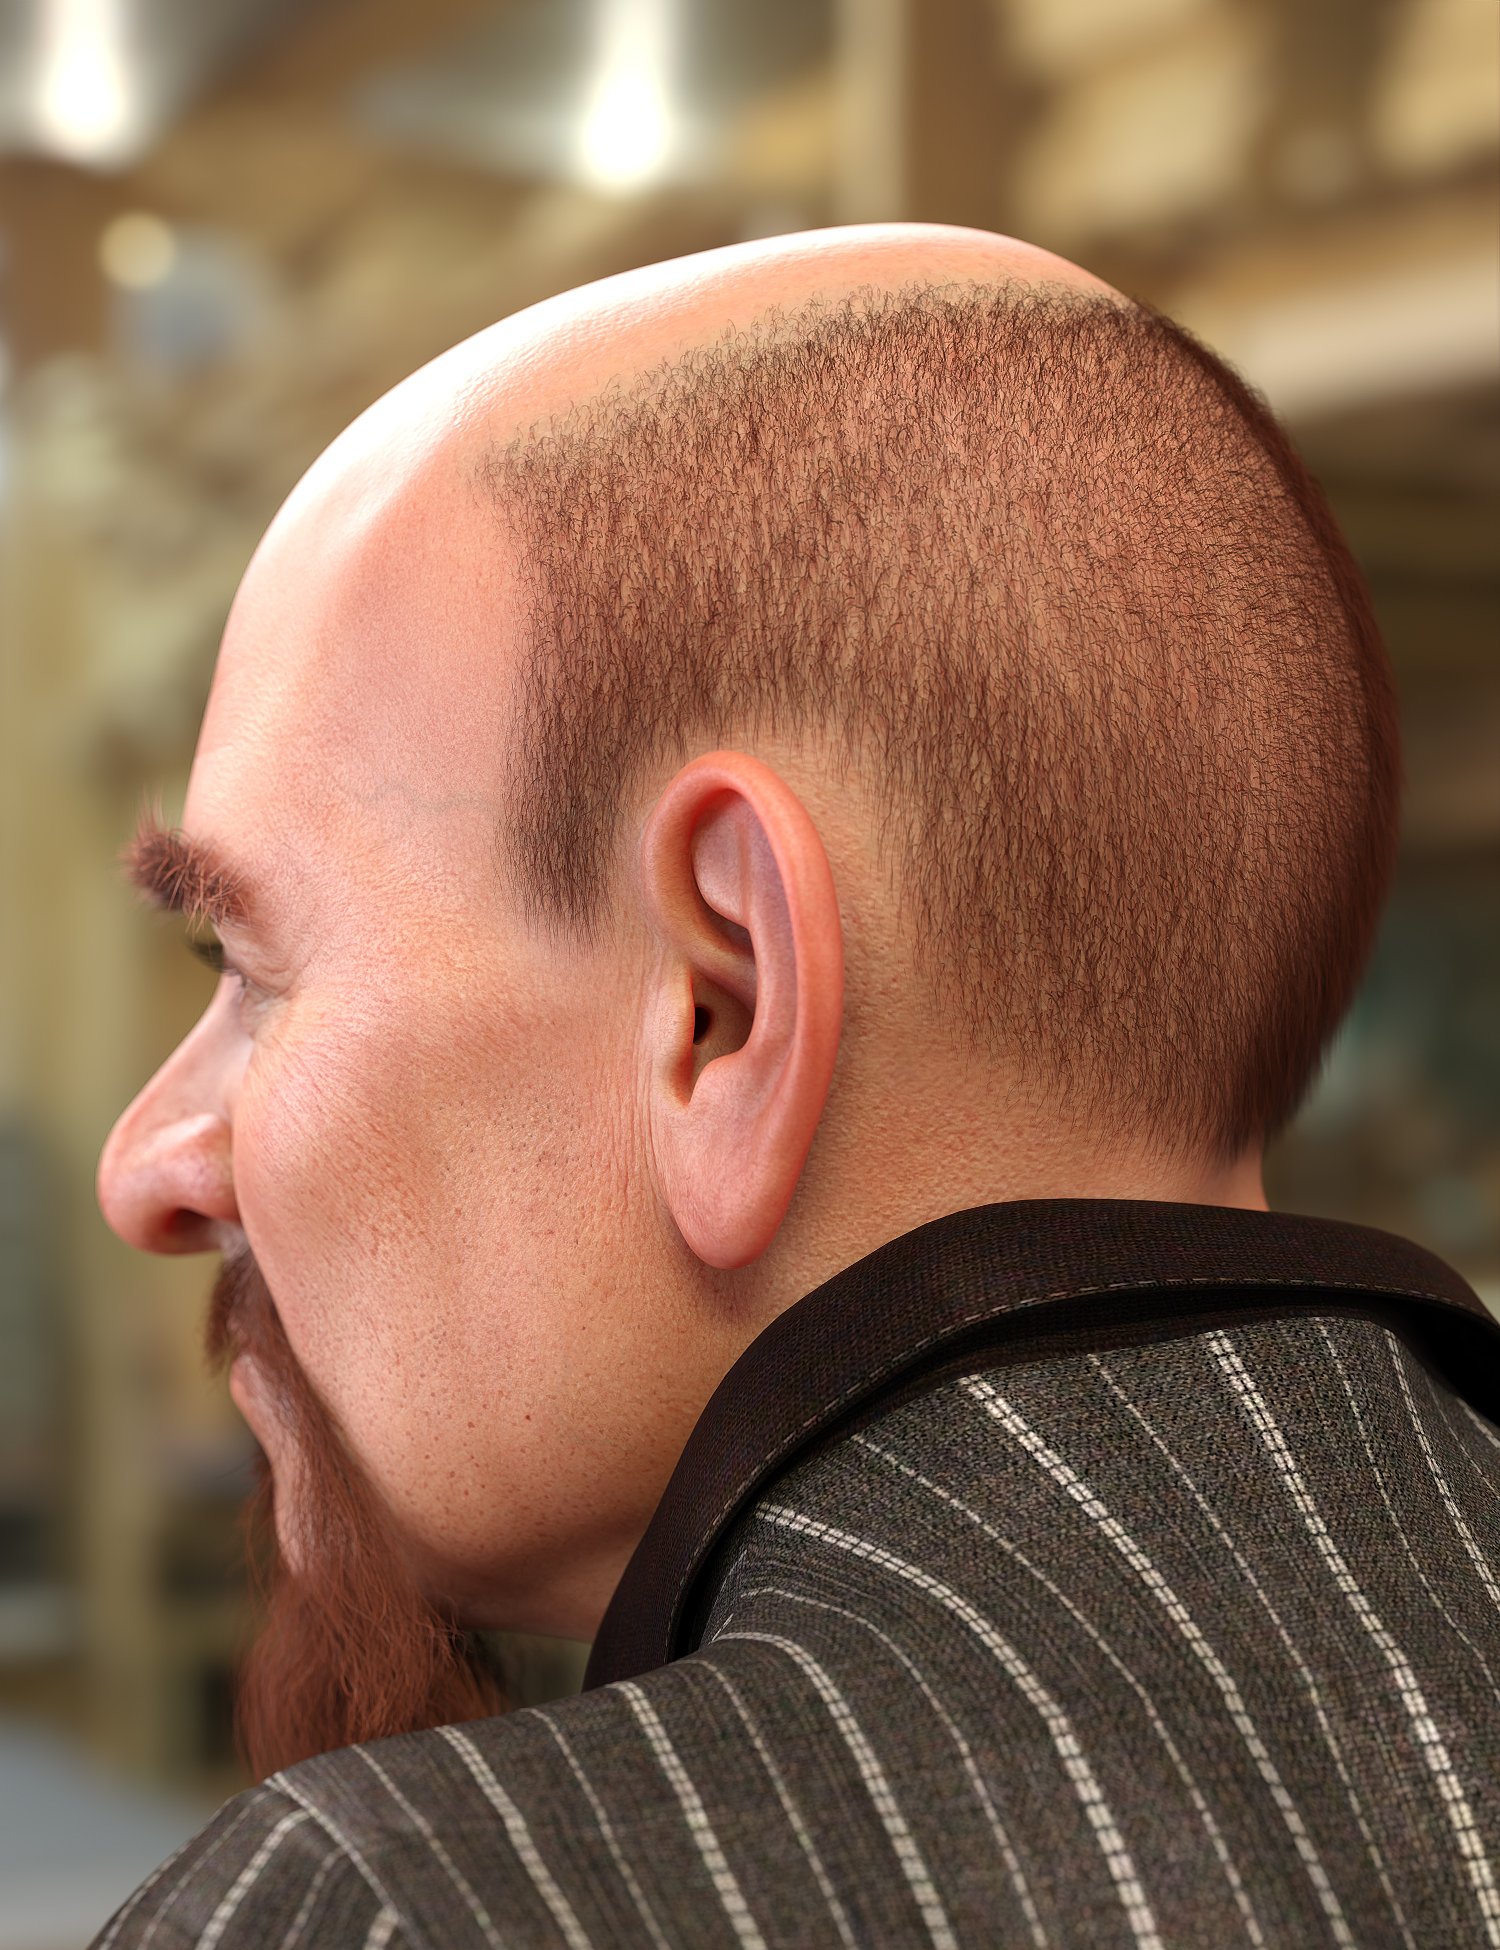 M3D Tough Guy Hair Set Genesis 8.1 Males by: Matari3D, 3D Models by Daz 3D